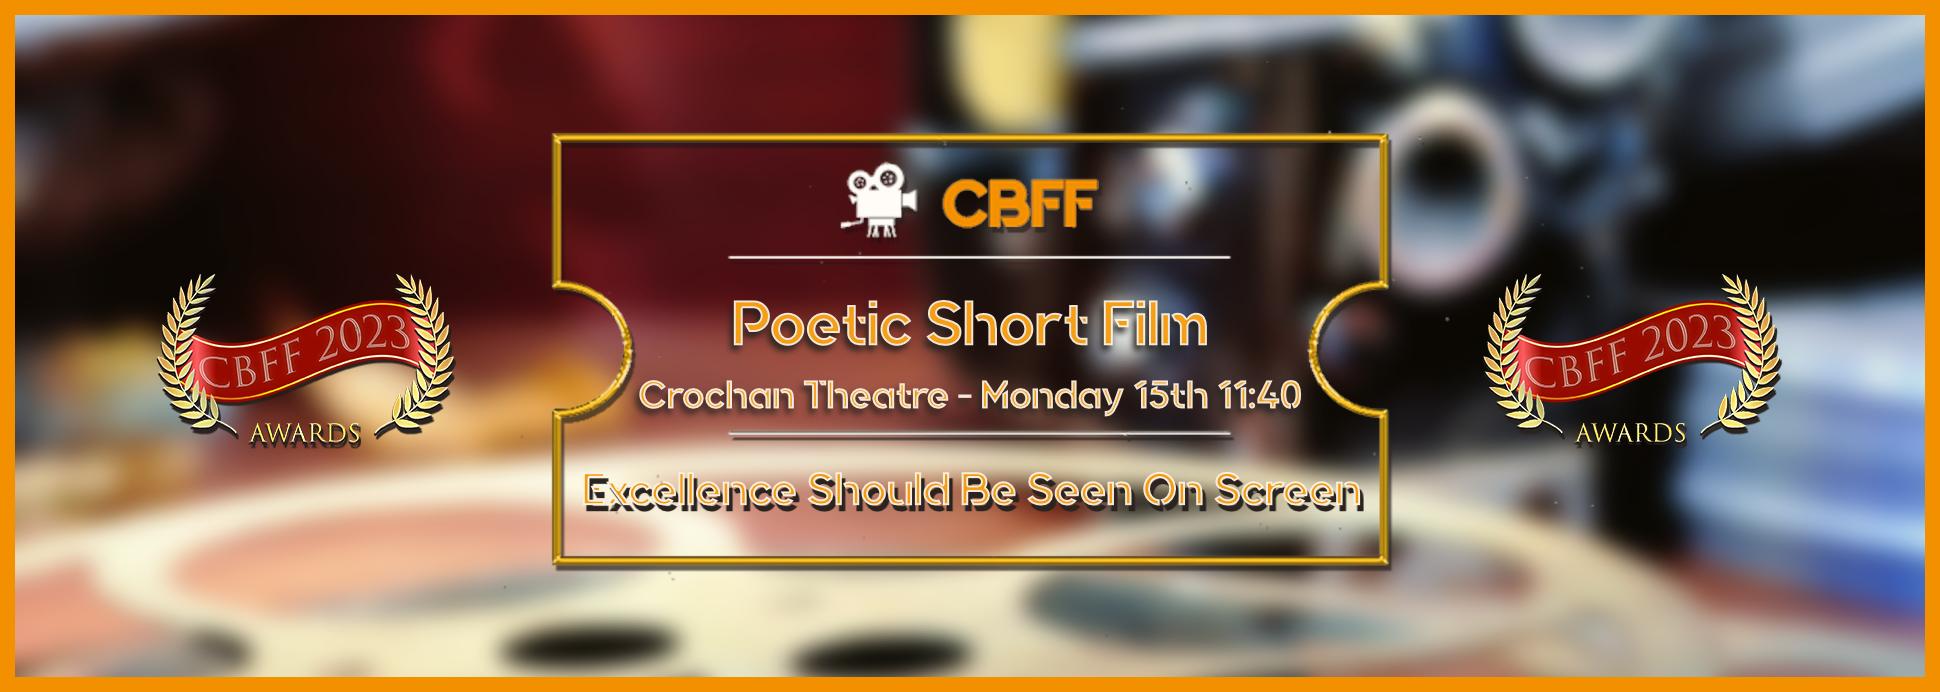 Crochan Poetic Short Film 15th 11:40